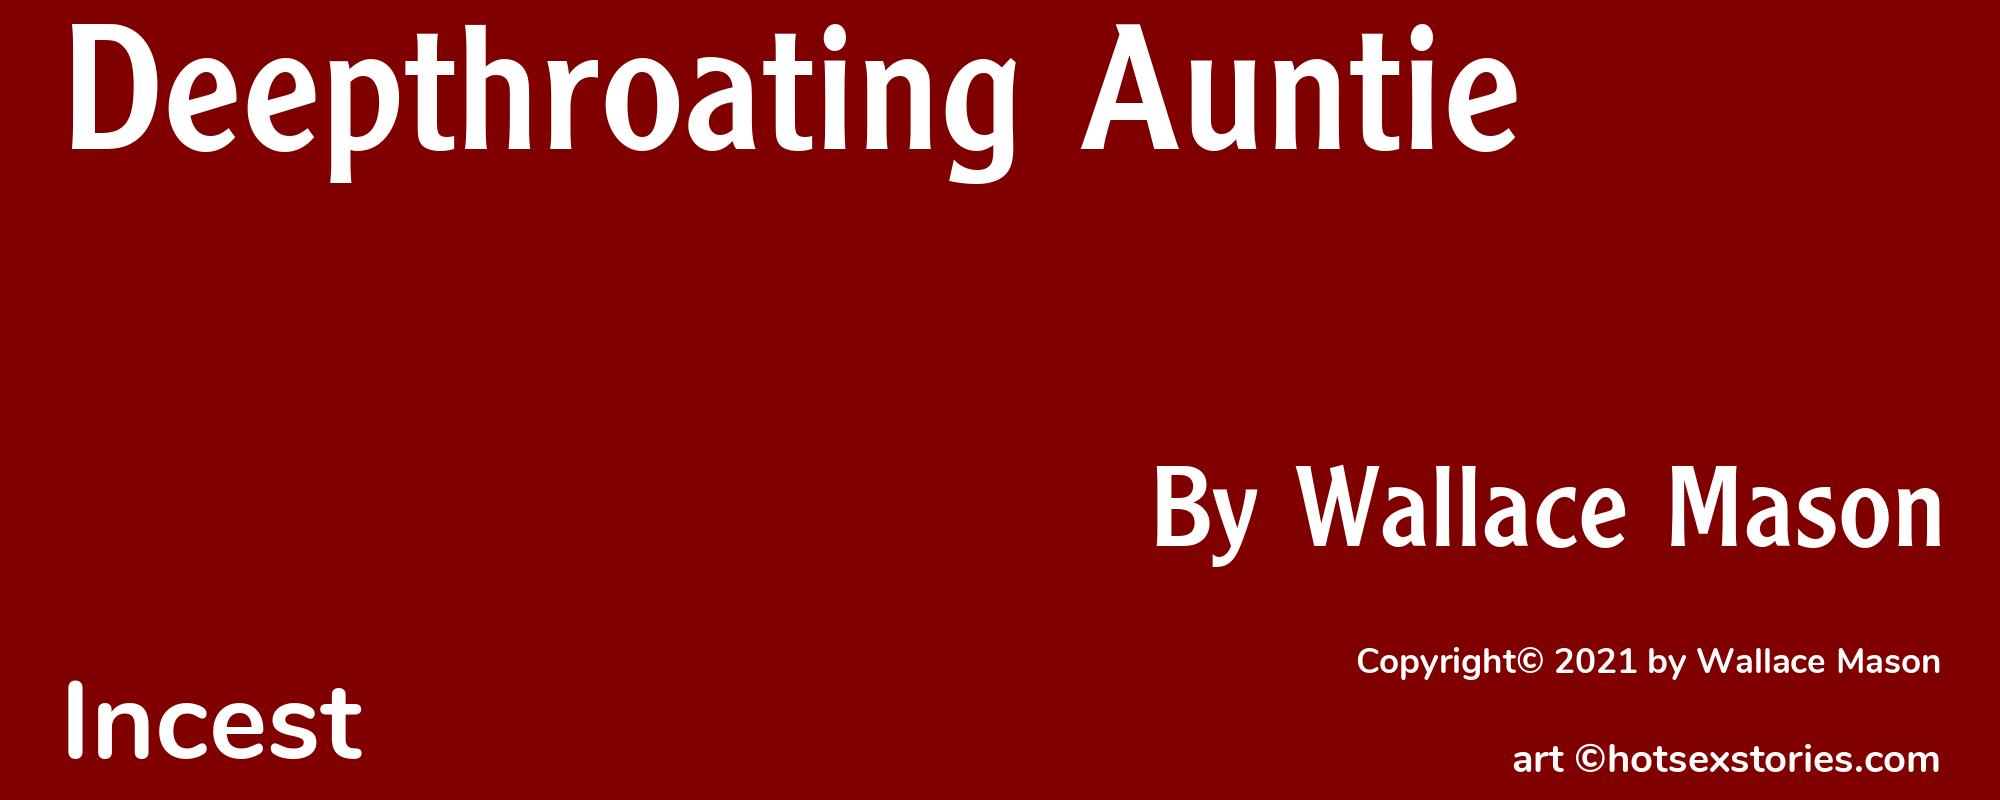 Deepthroating Auntie - Cover